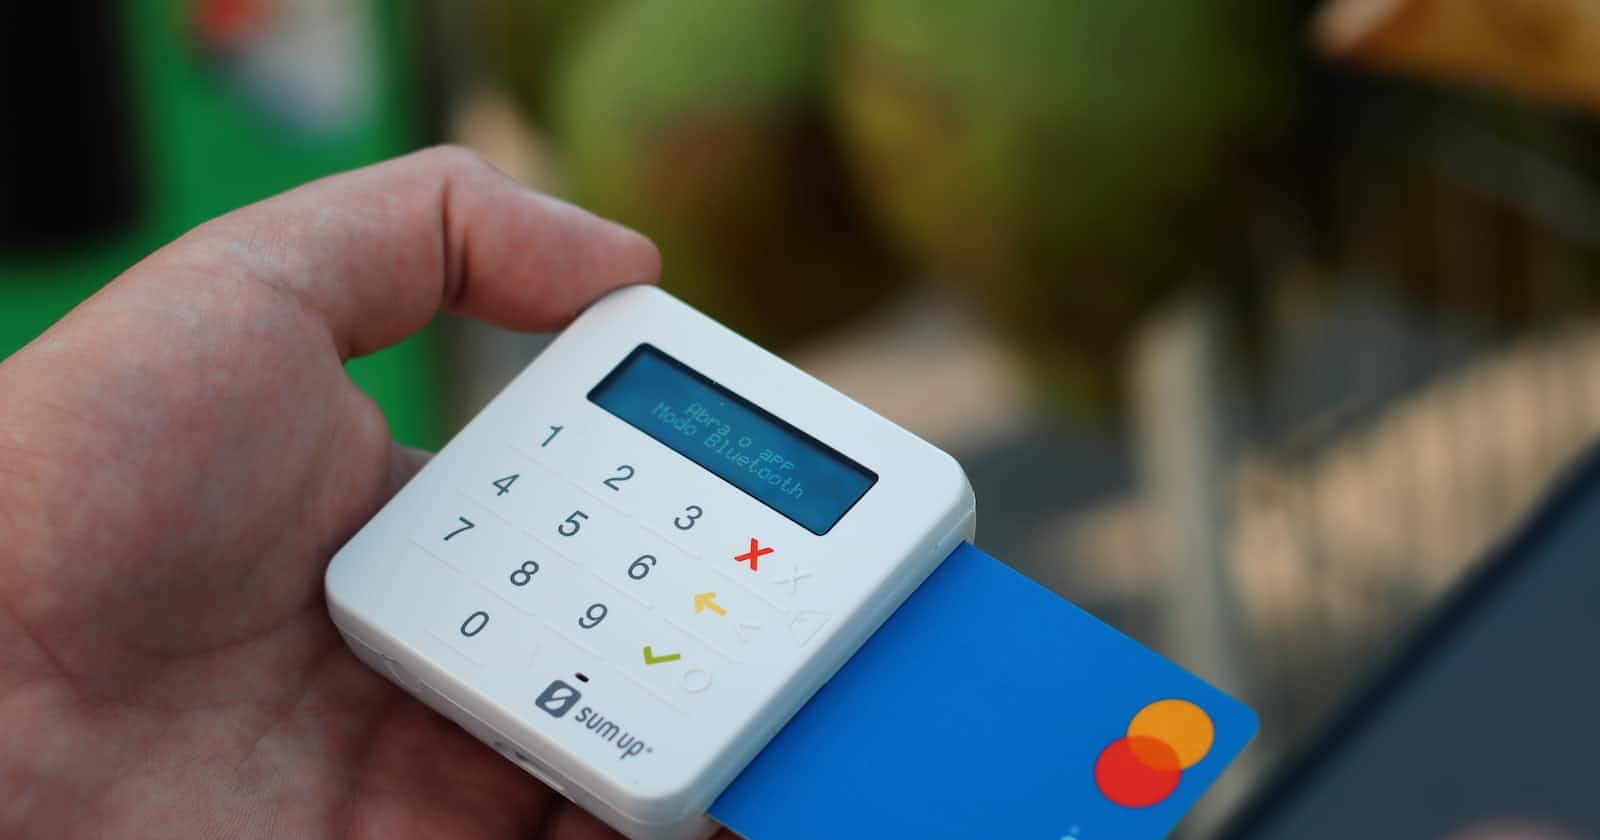 Build a Credit Card validator using Go